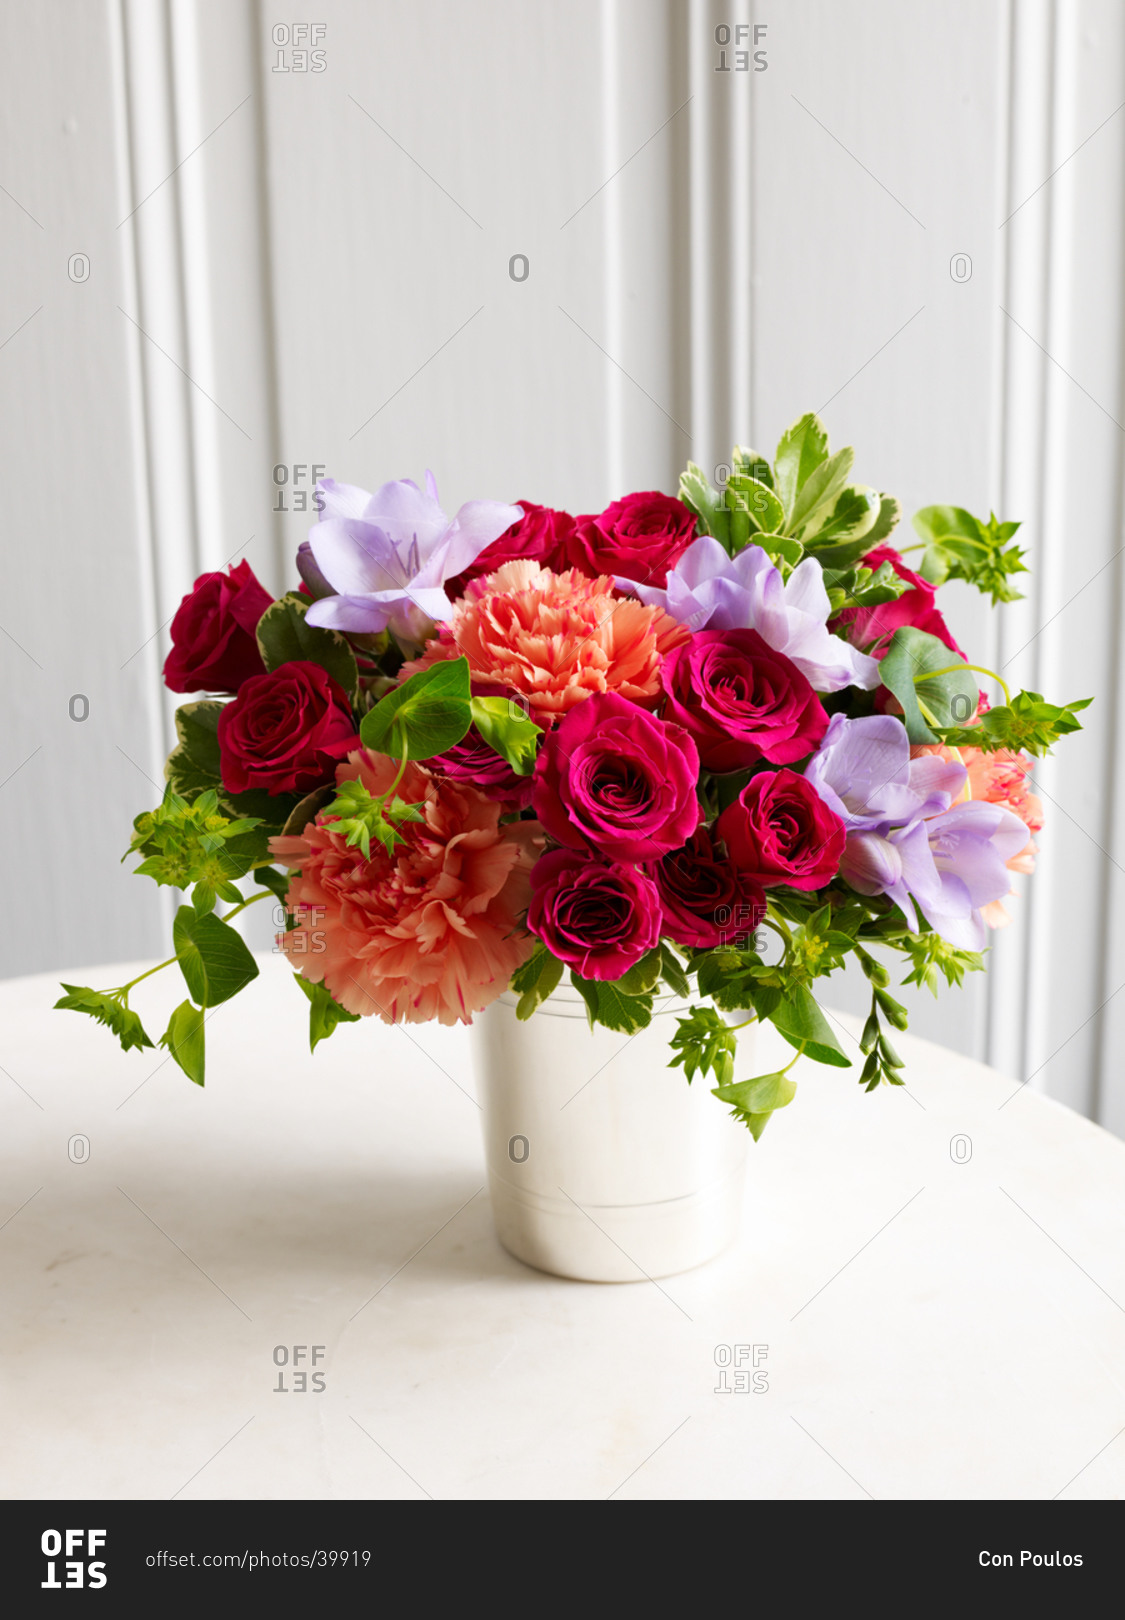 Colorful spring flowers in vase